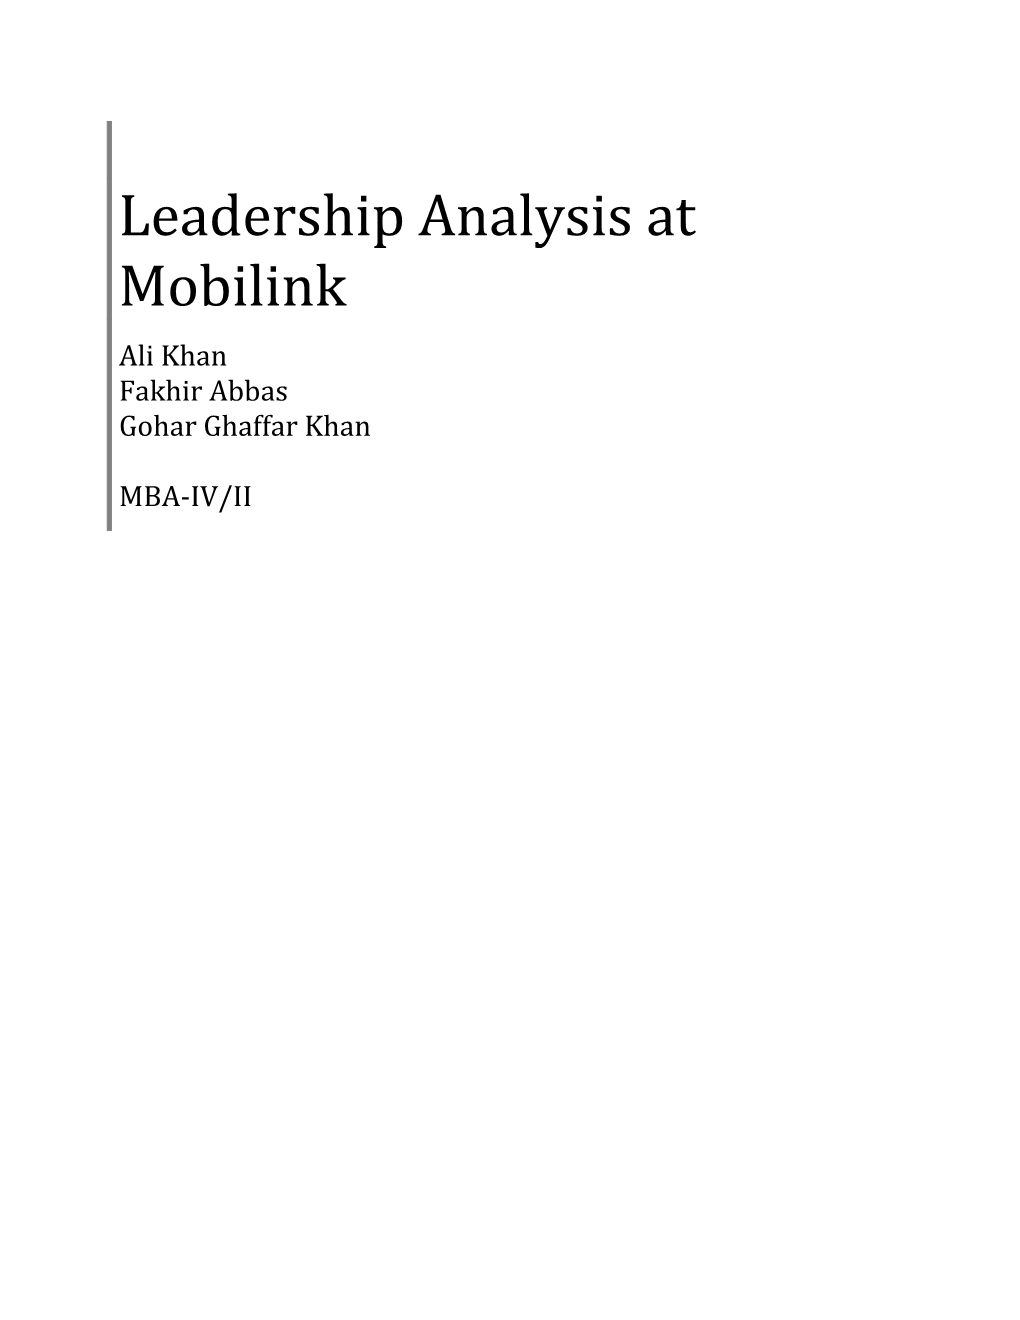 Leadership Analysis at Mobilink